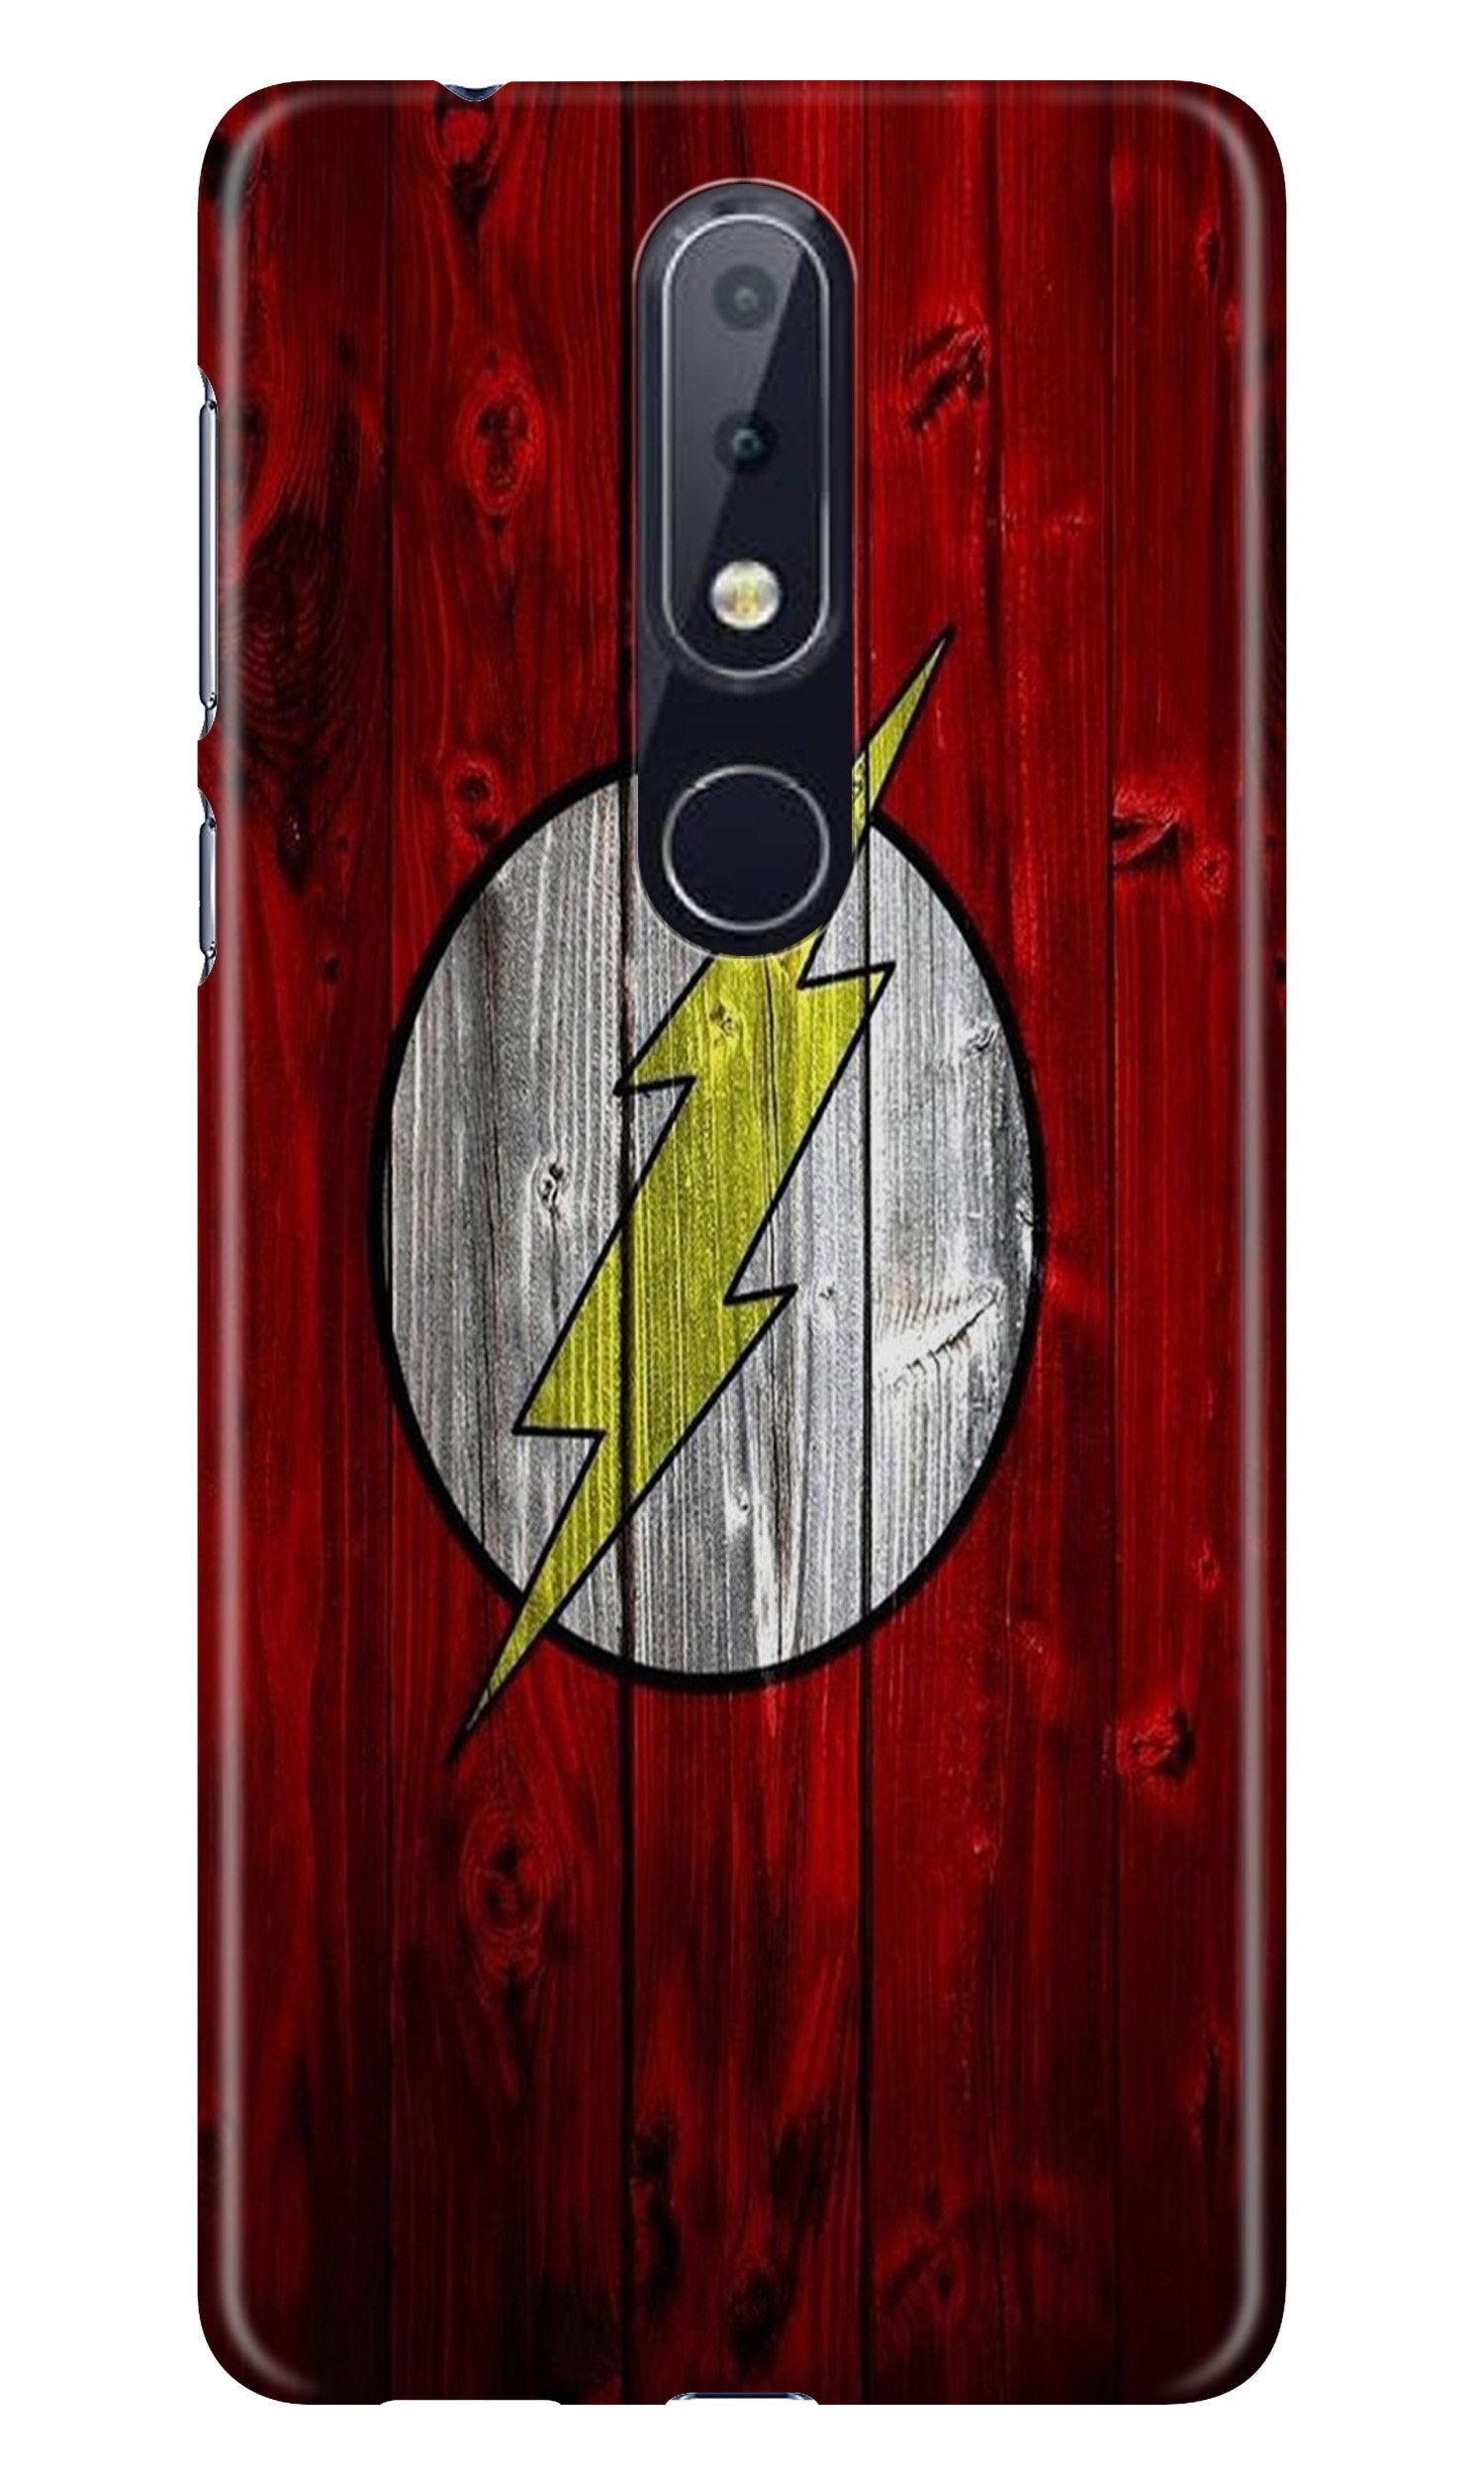 Flash Superhero Case for Nokia 3.2  (Design - 116)